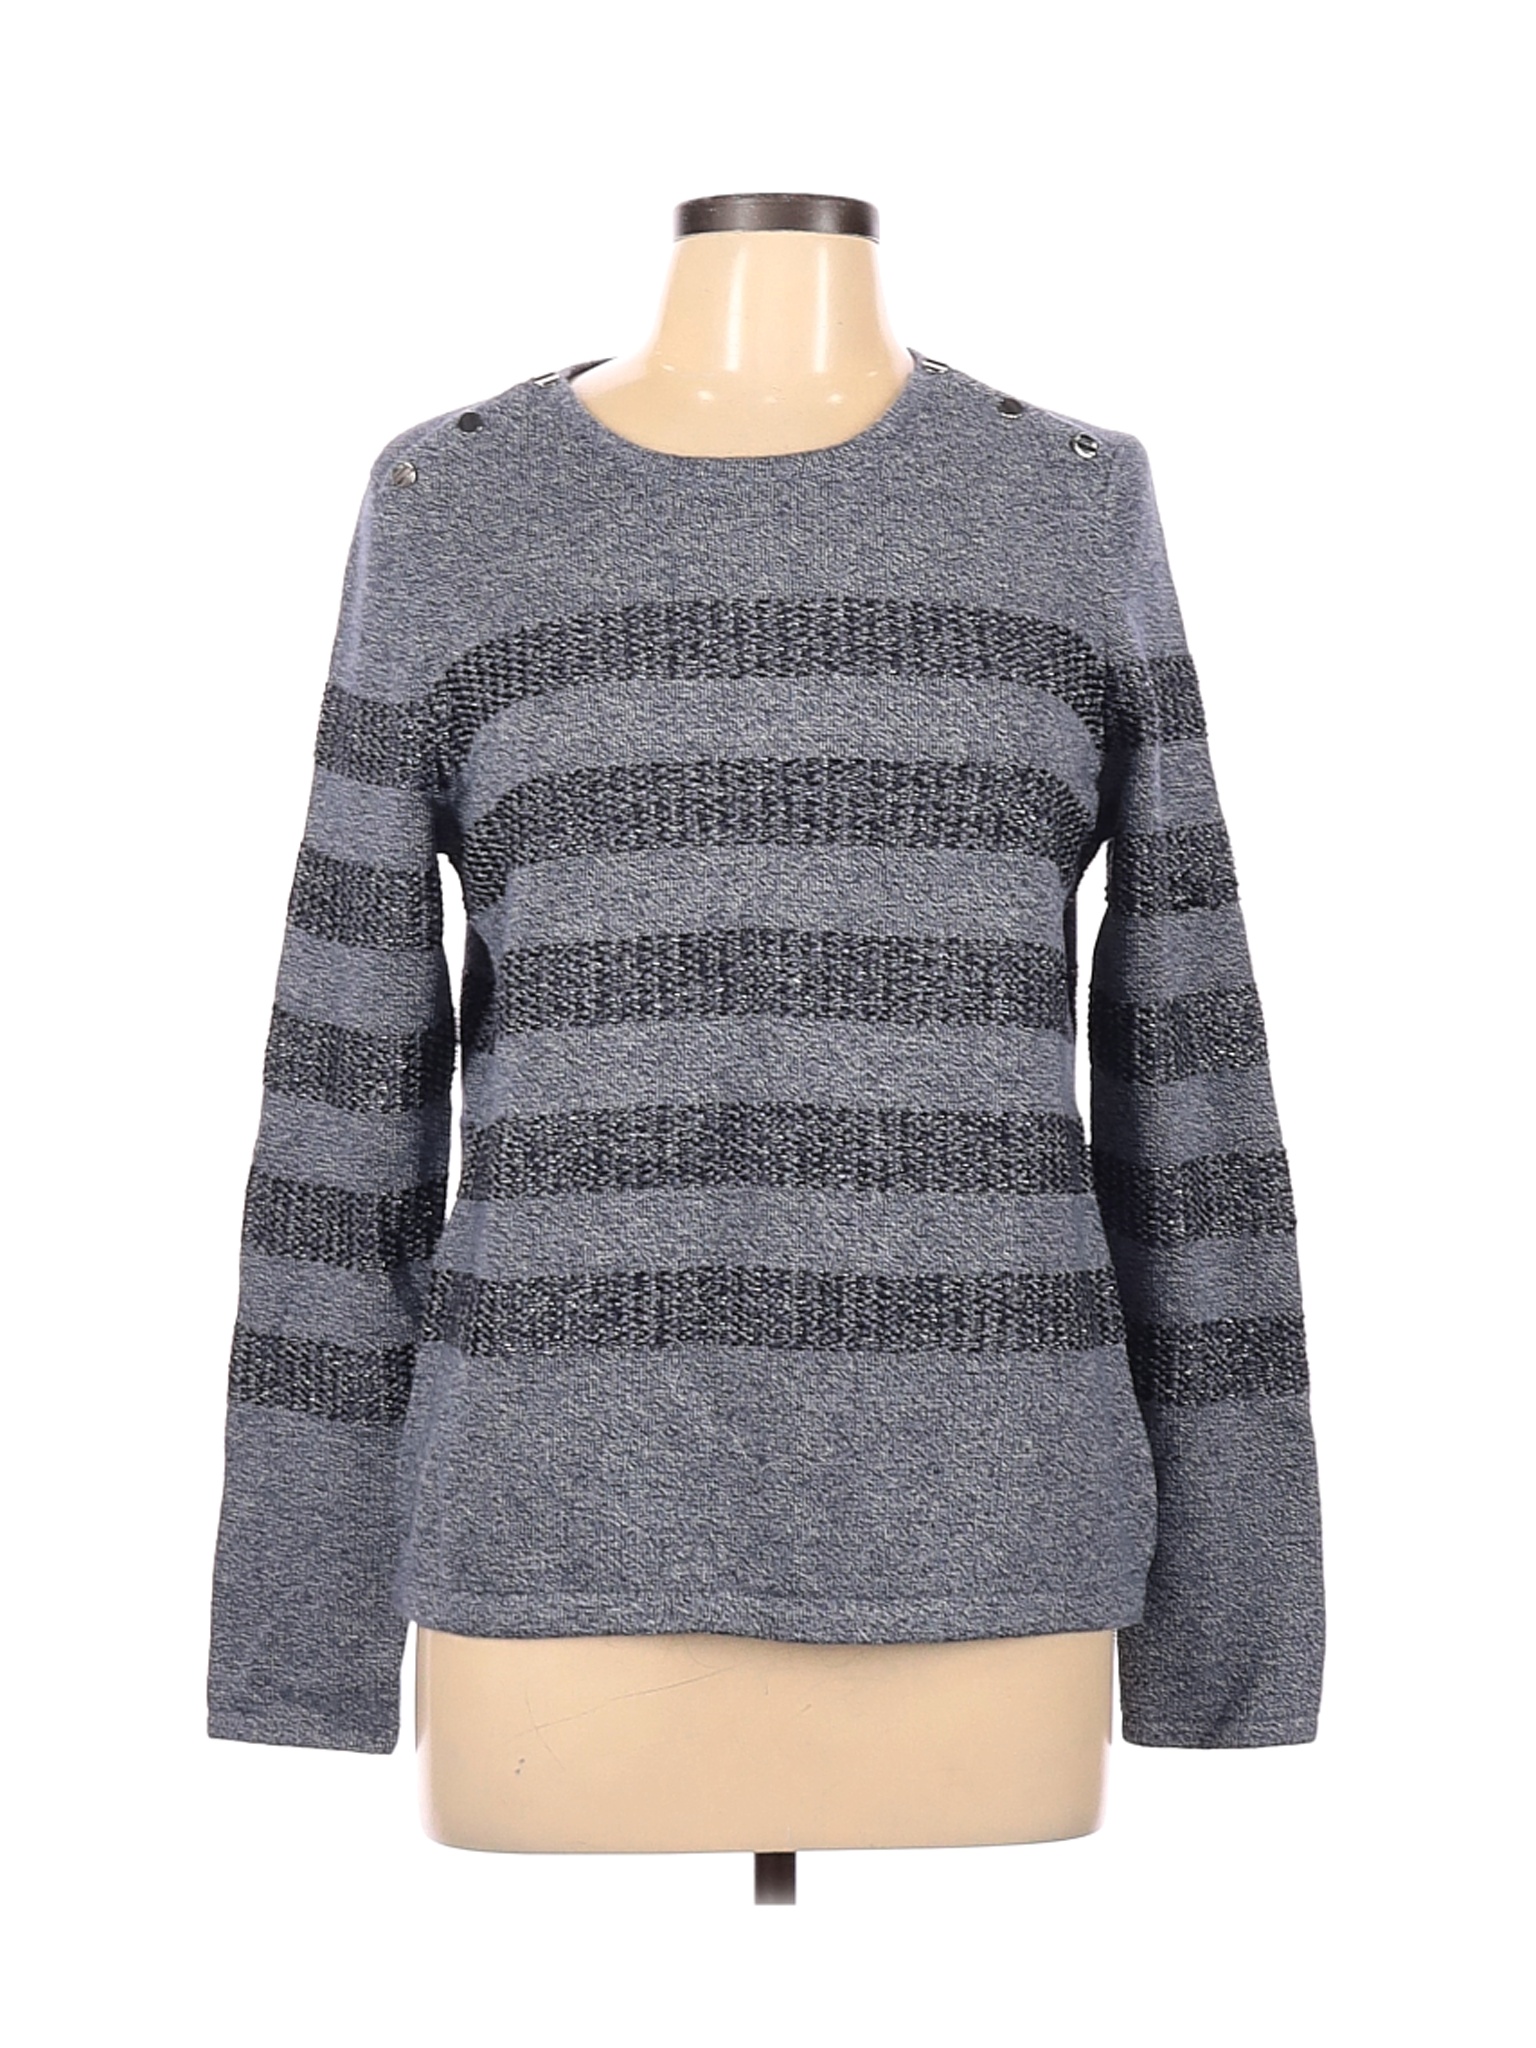 NWT J. McLaughlin Women Gray Pullover Sweater L | eBay